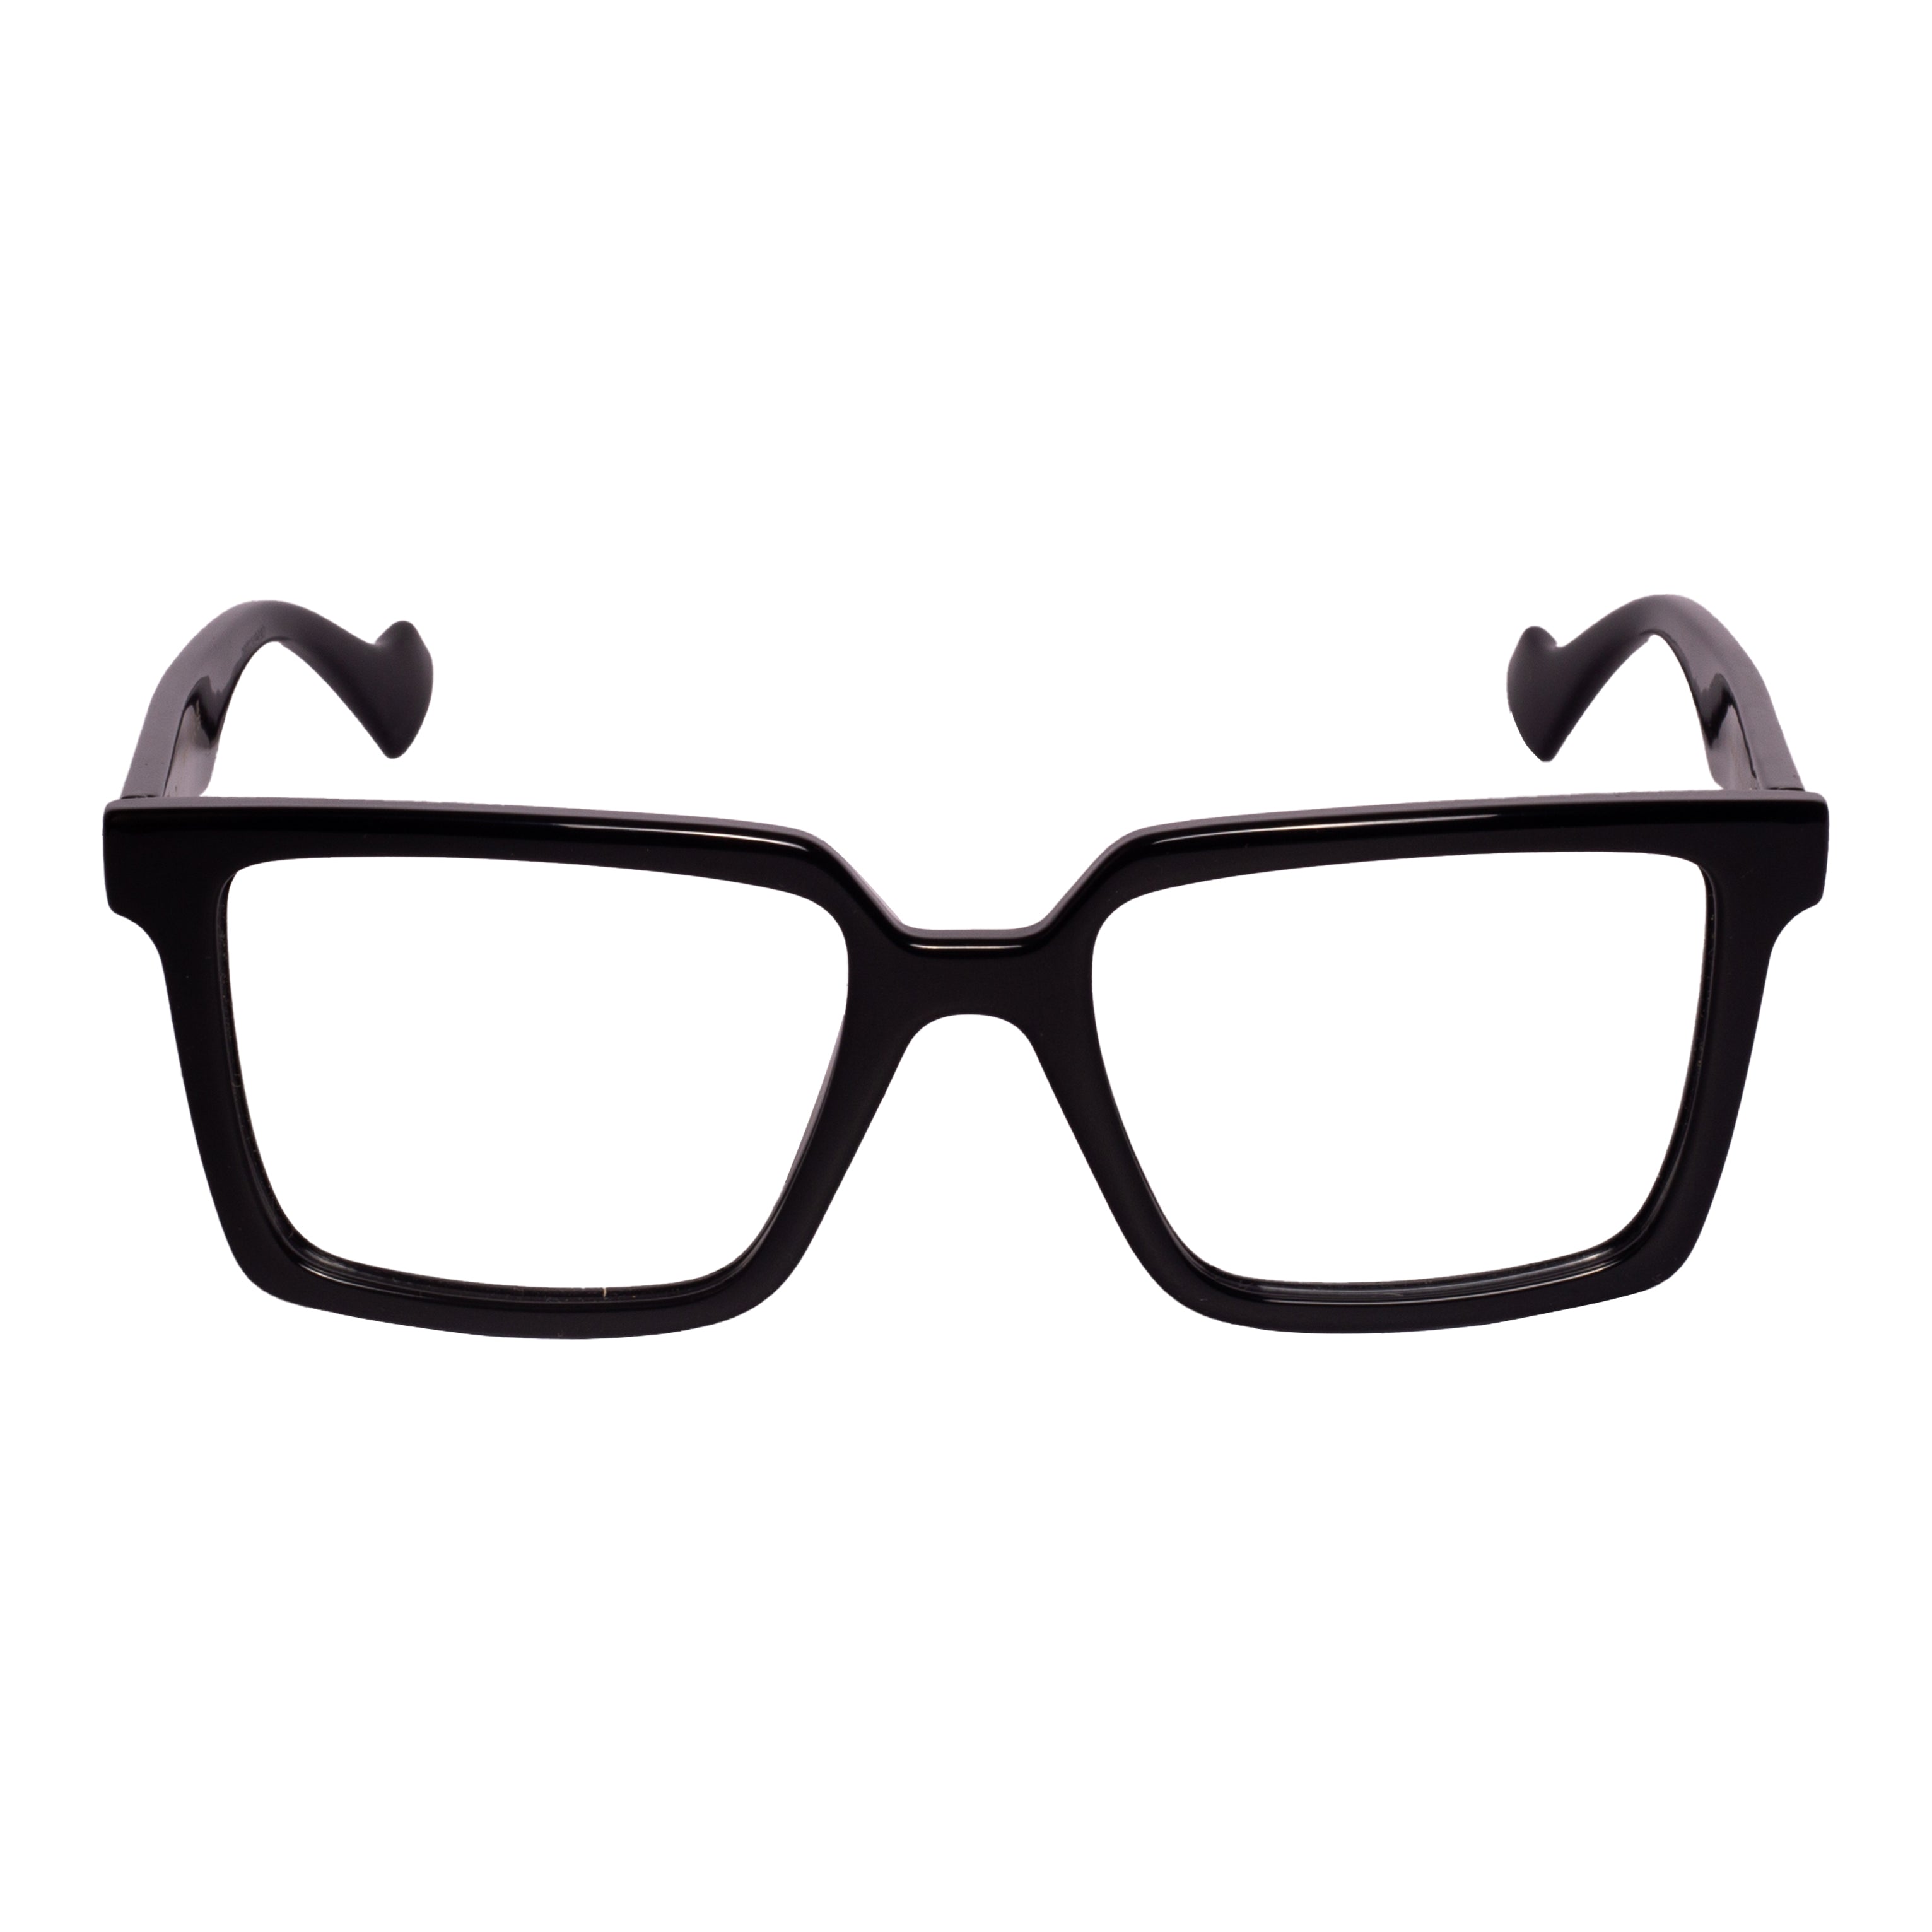 Gucci-GG1504-54-001 Eyeglasses - Premium Eyeglasses from Gucci - Just Rs. 26000! Shop now at Laxmi Opticians